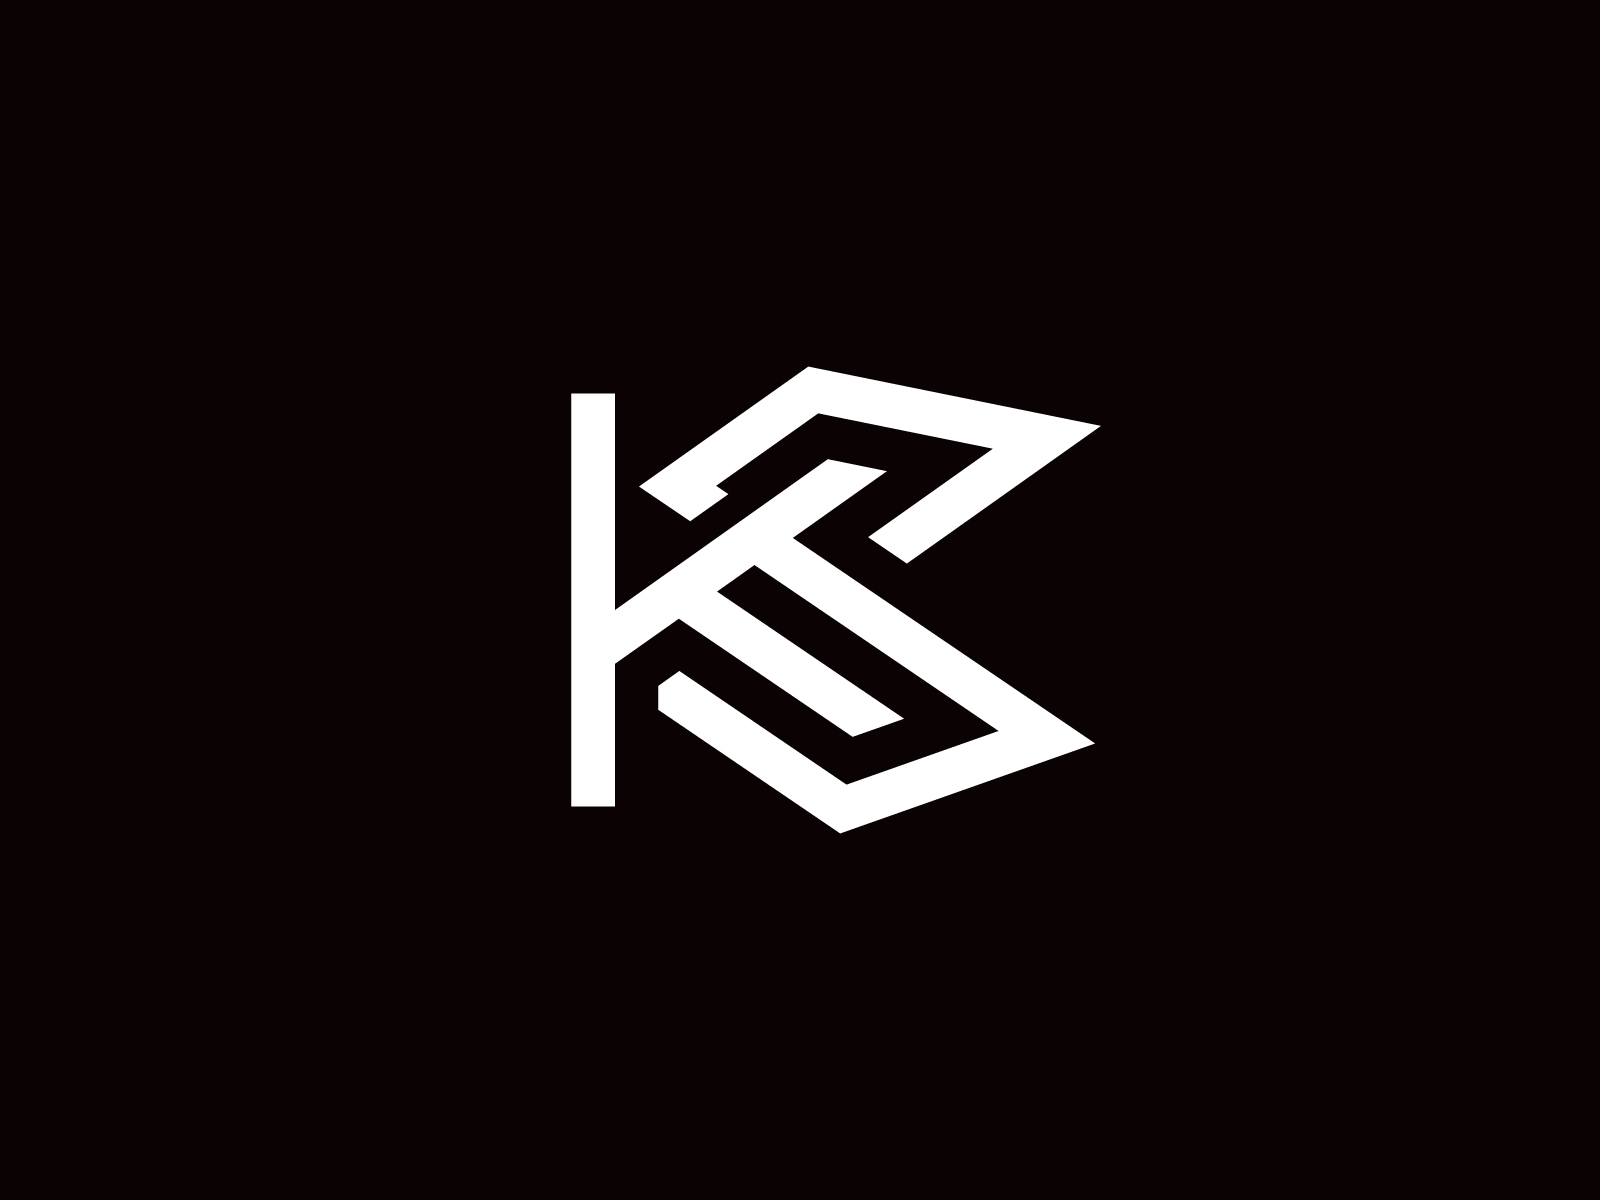 Ks logo Vectors & Illustrations for Free Download | Freepik